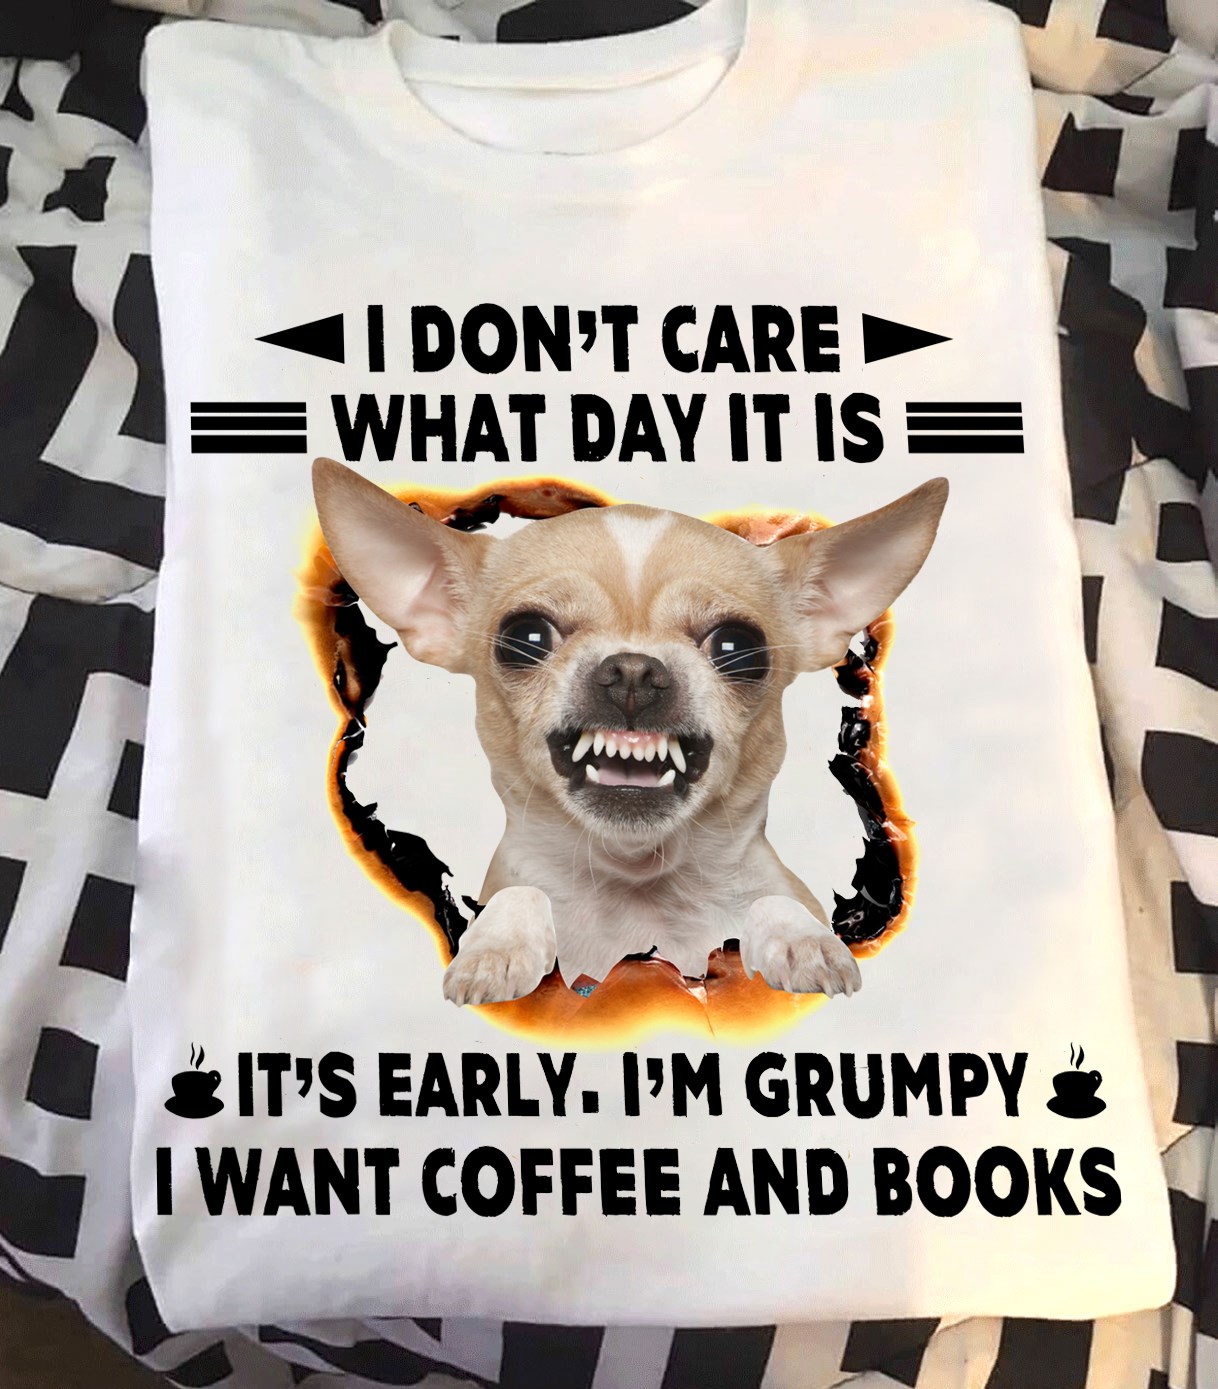 I don't care what day it is i'm grumpy i want coffee and books - Chihuahua dog